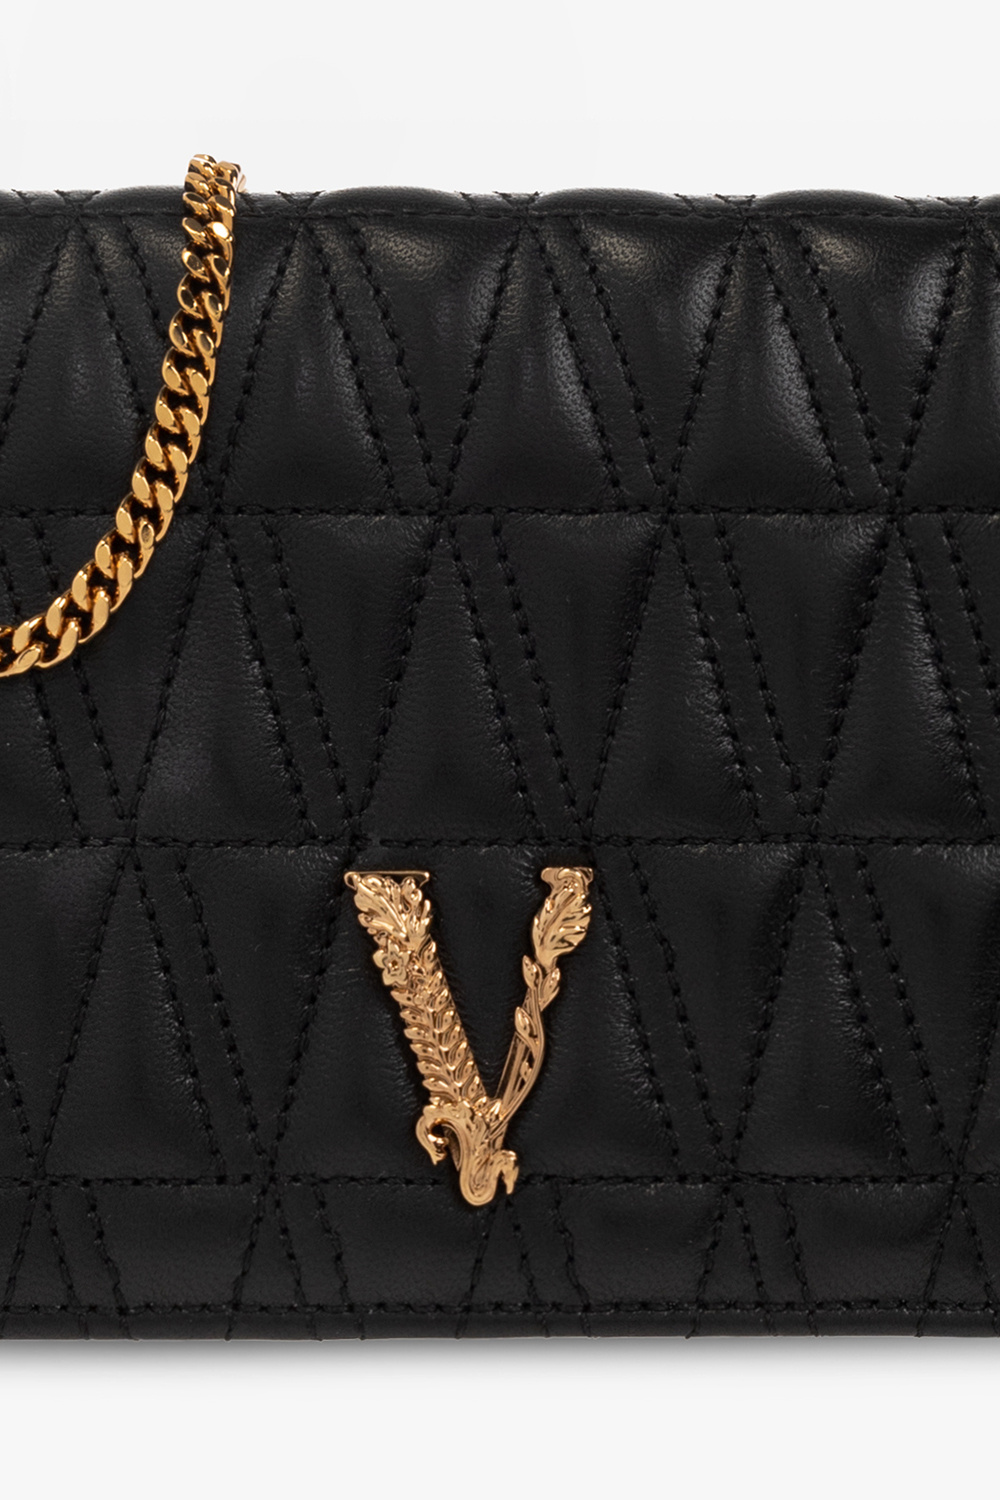 Versace Virtus Black Saffiano Leather Tote